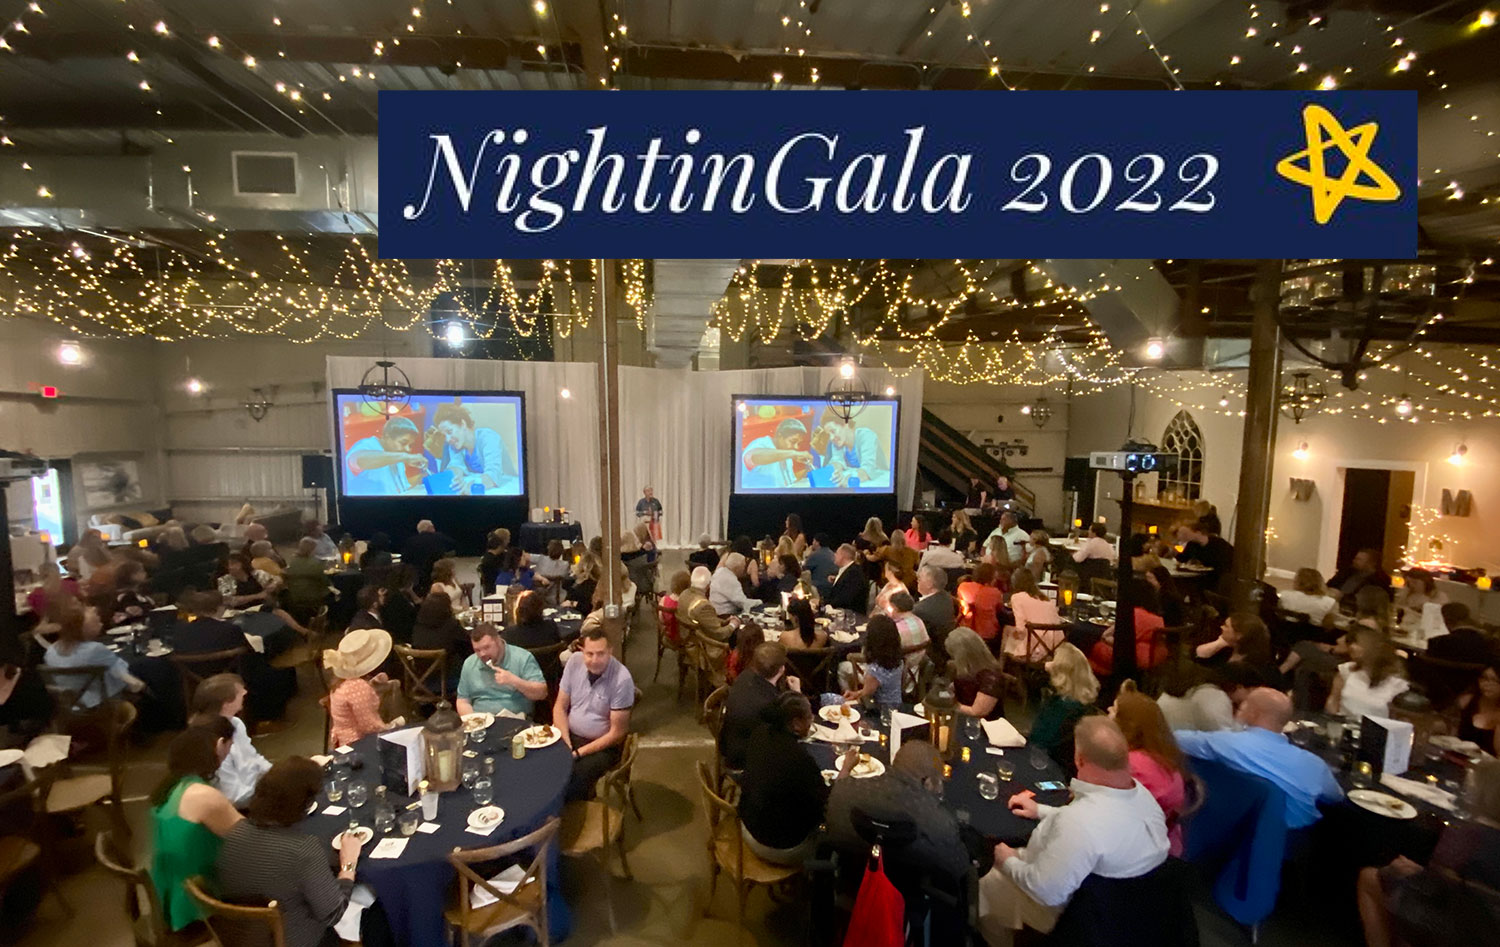 Looking down on Nightingala 2022